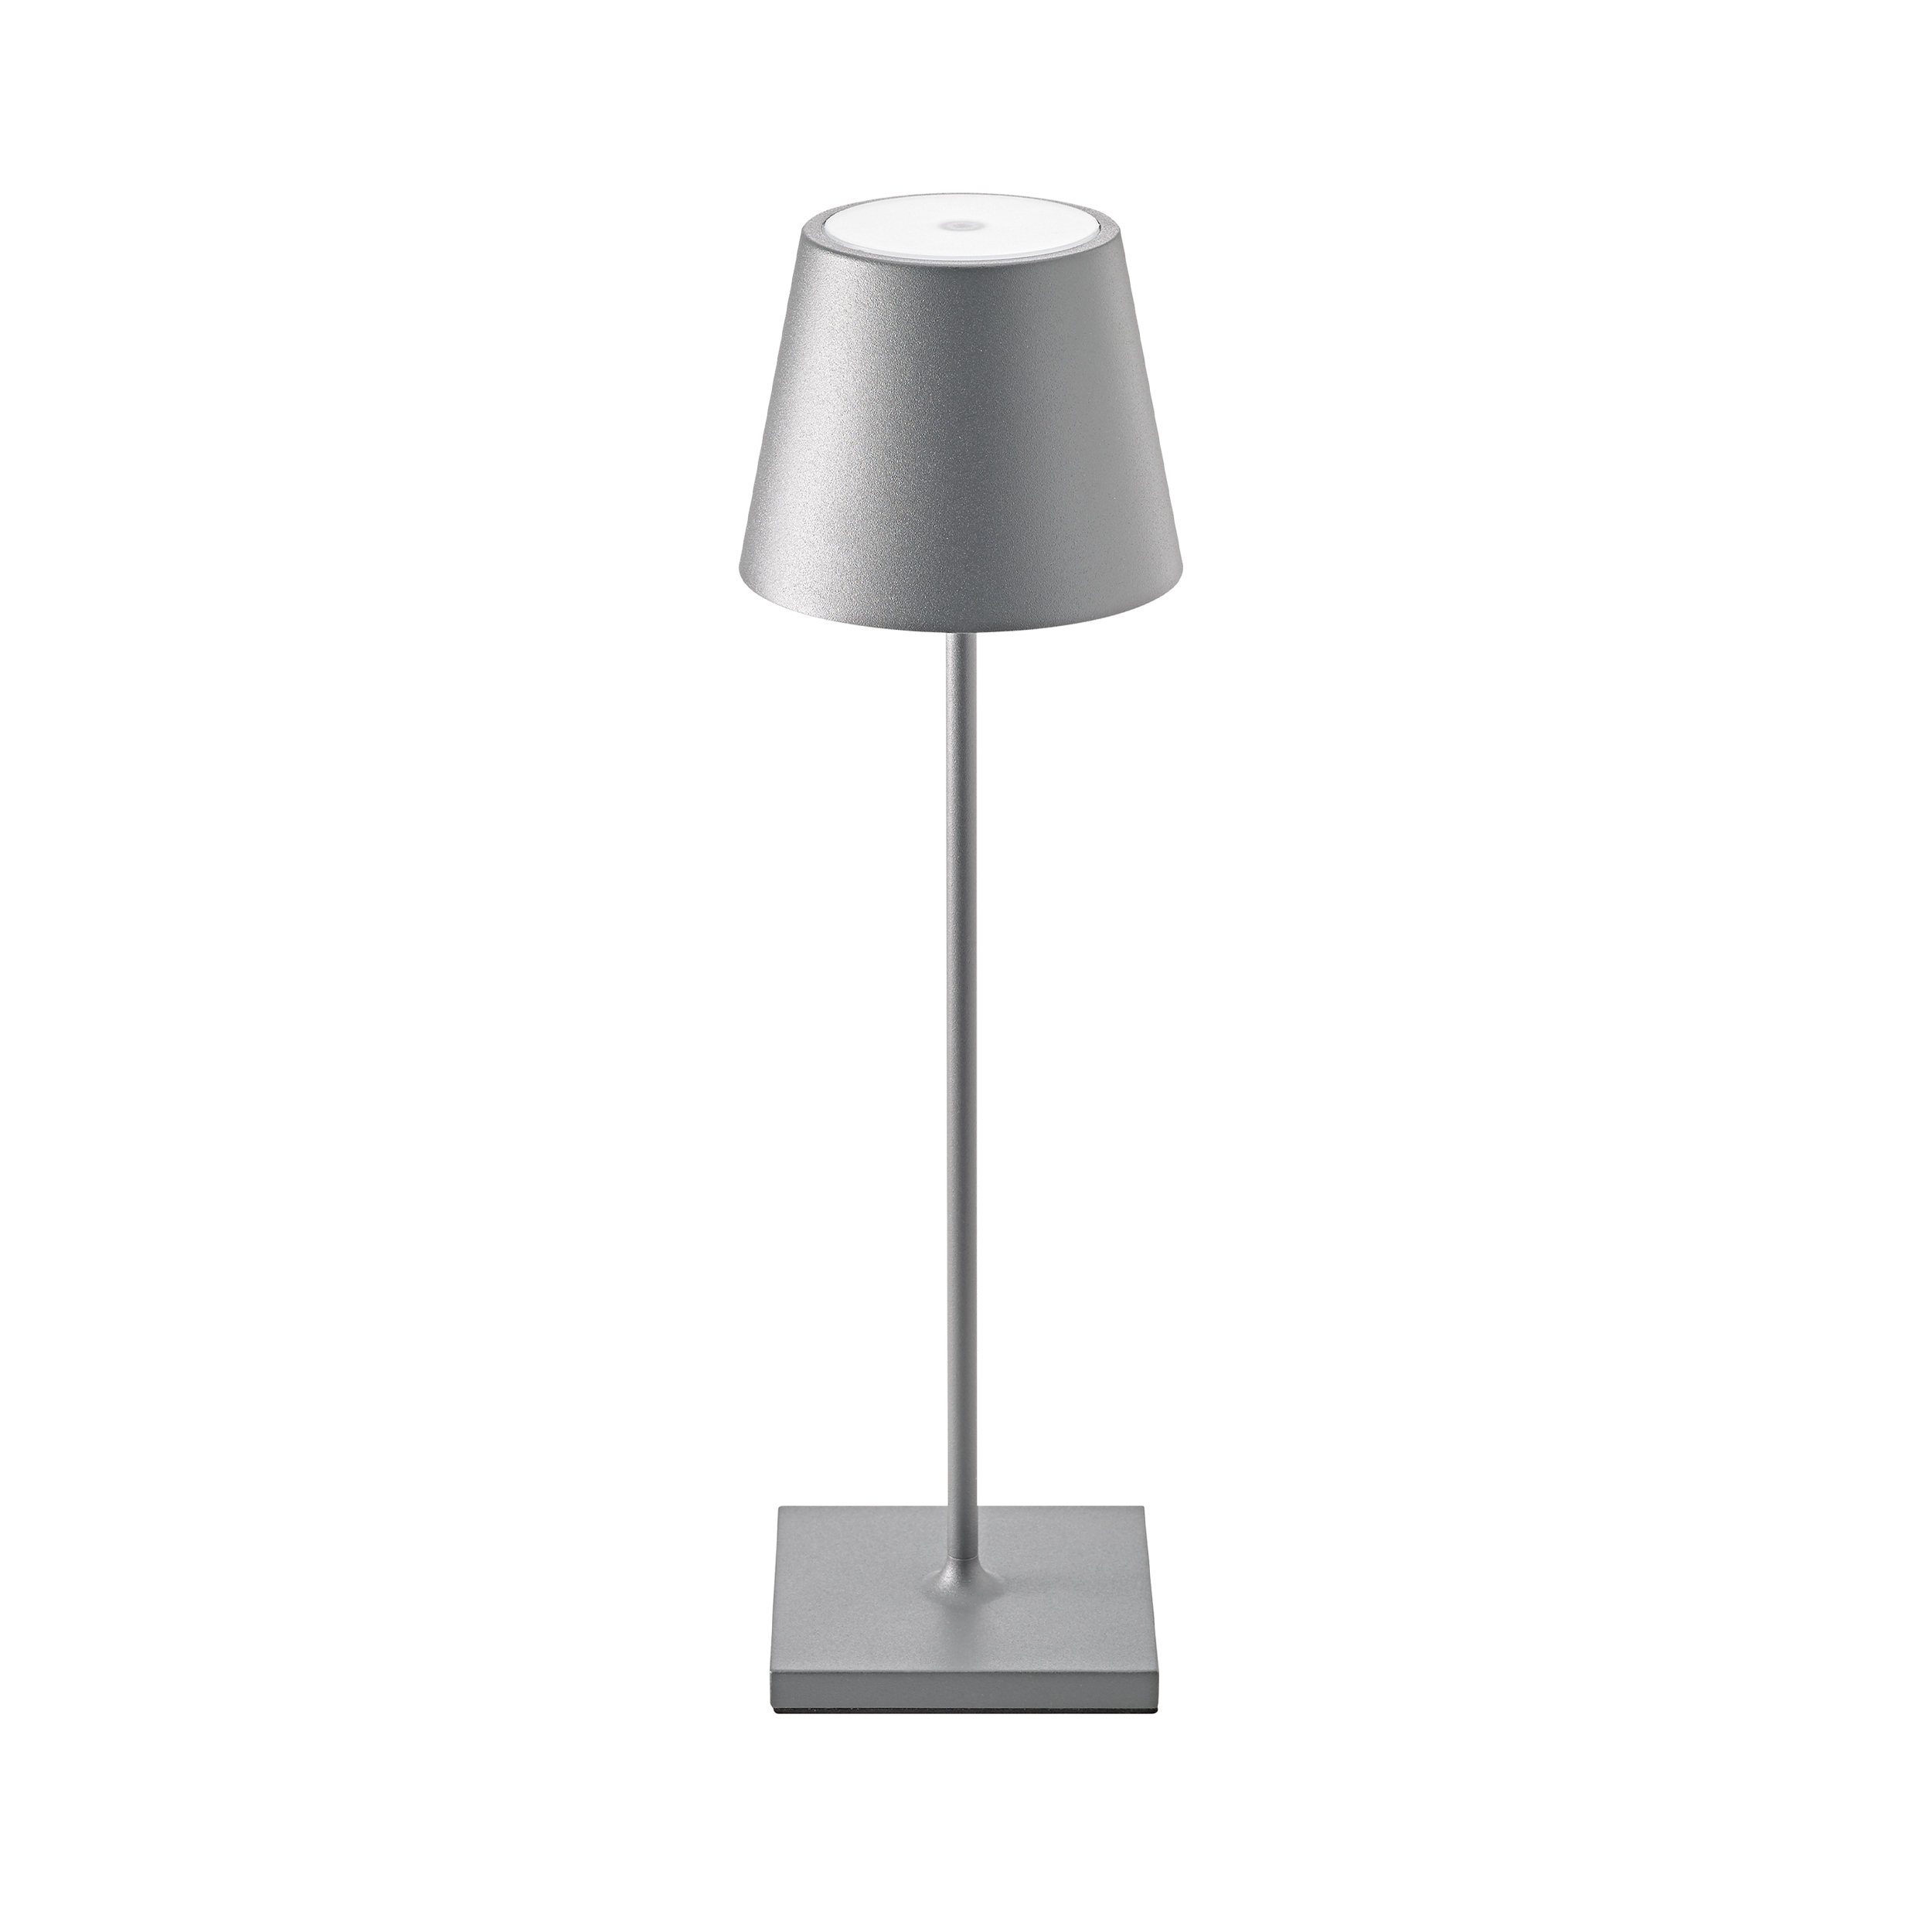 SIGOR NUINDIE Graphitgrau warmweiss Table Lamp LED